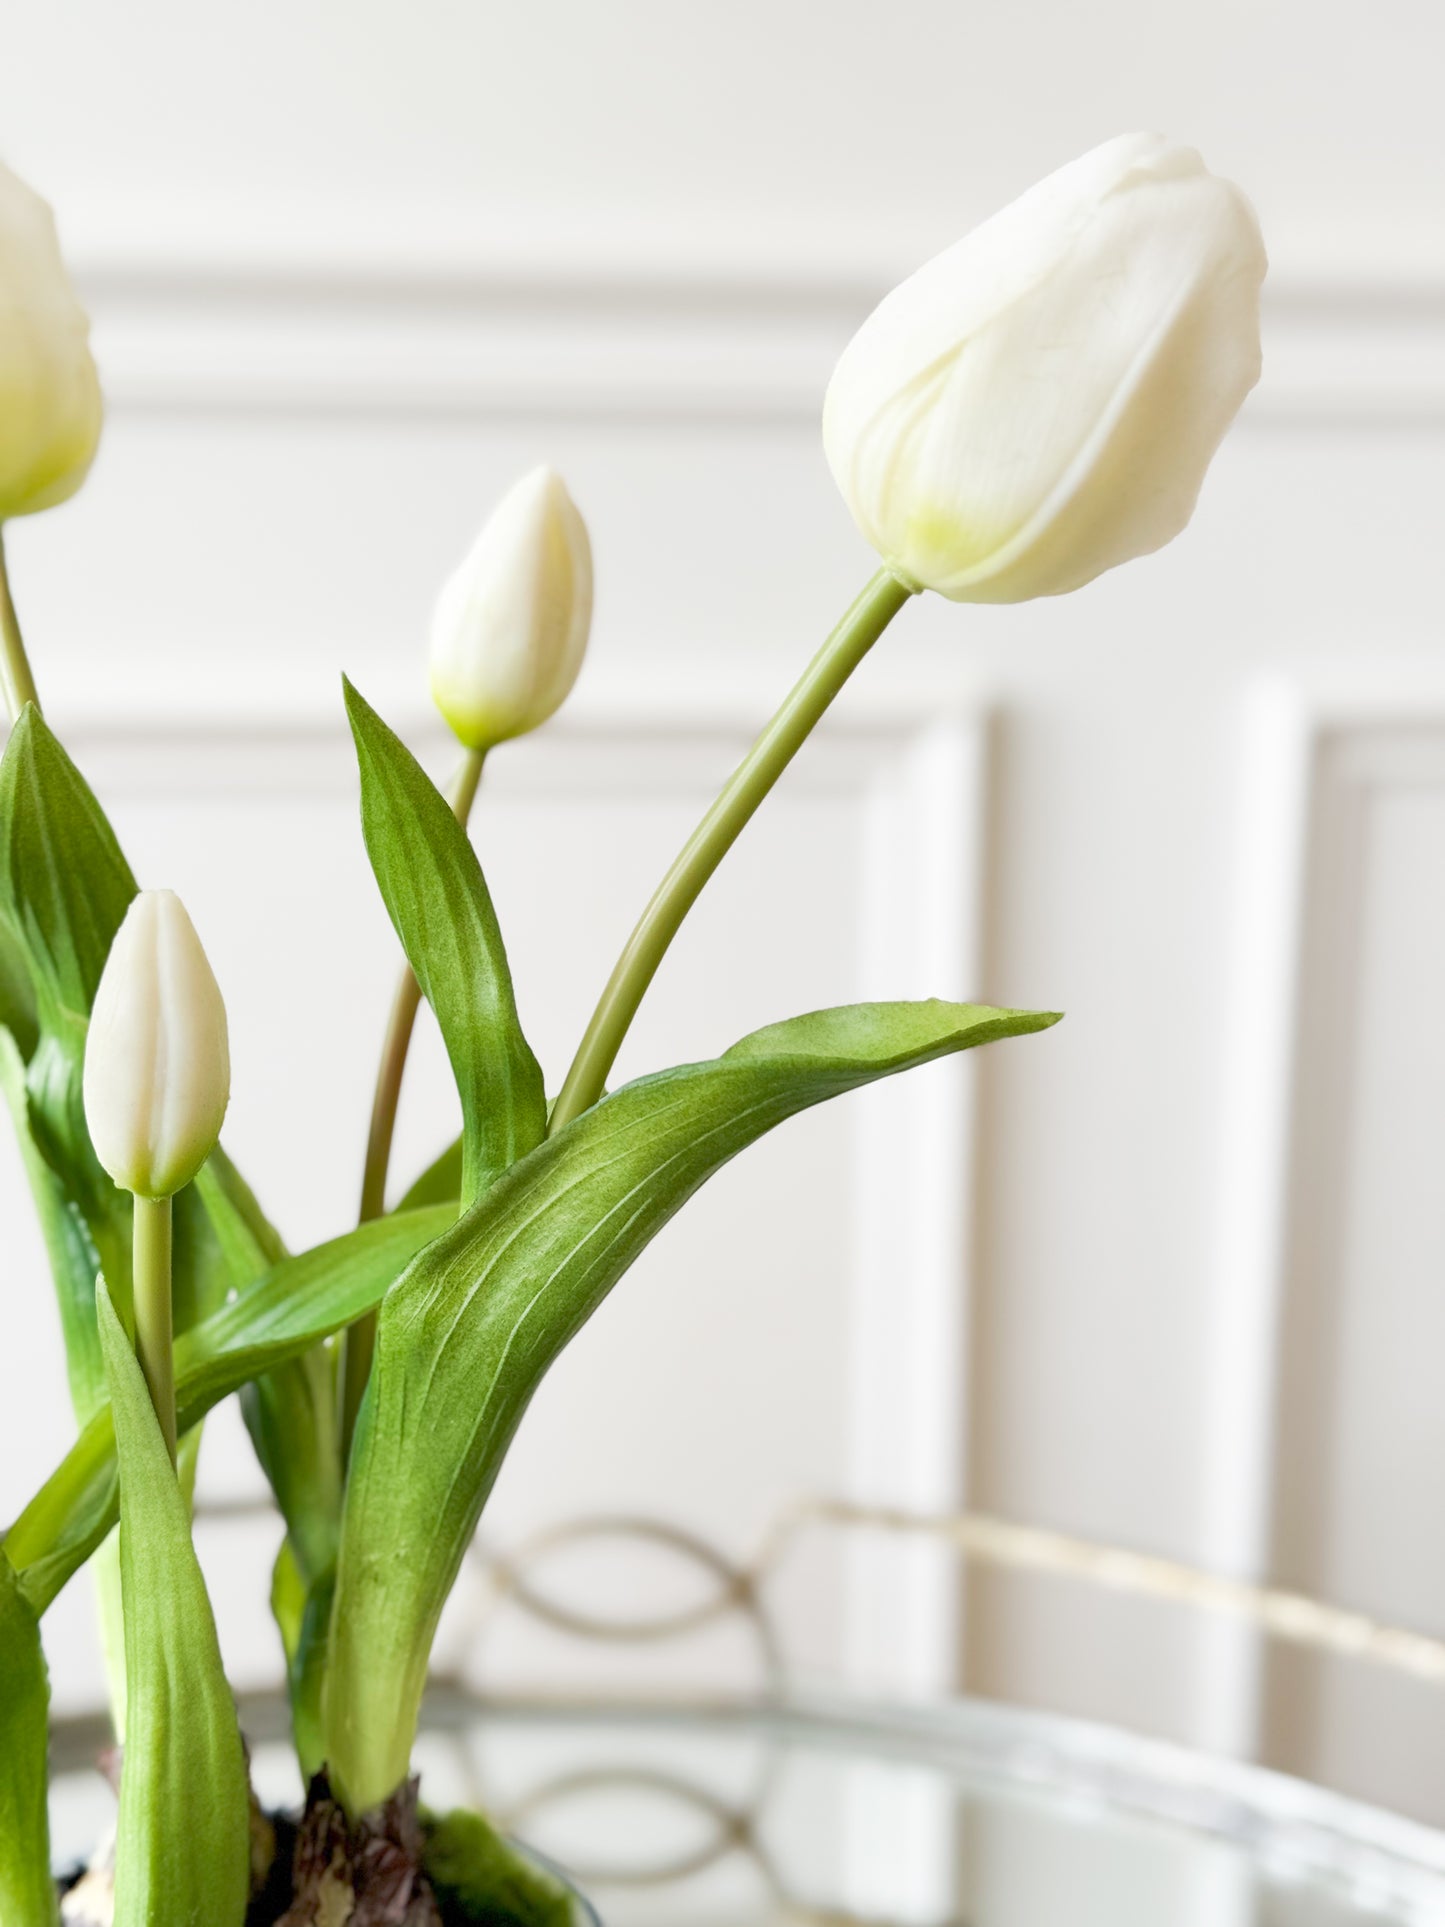 Tulips In Blue And White Ceramic Vase